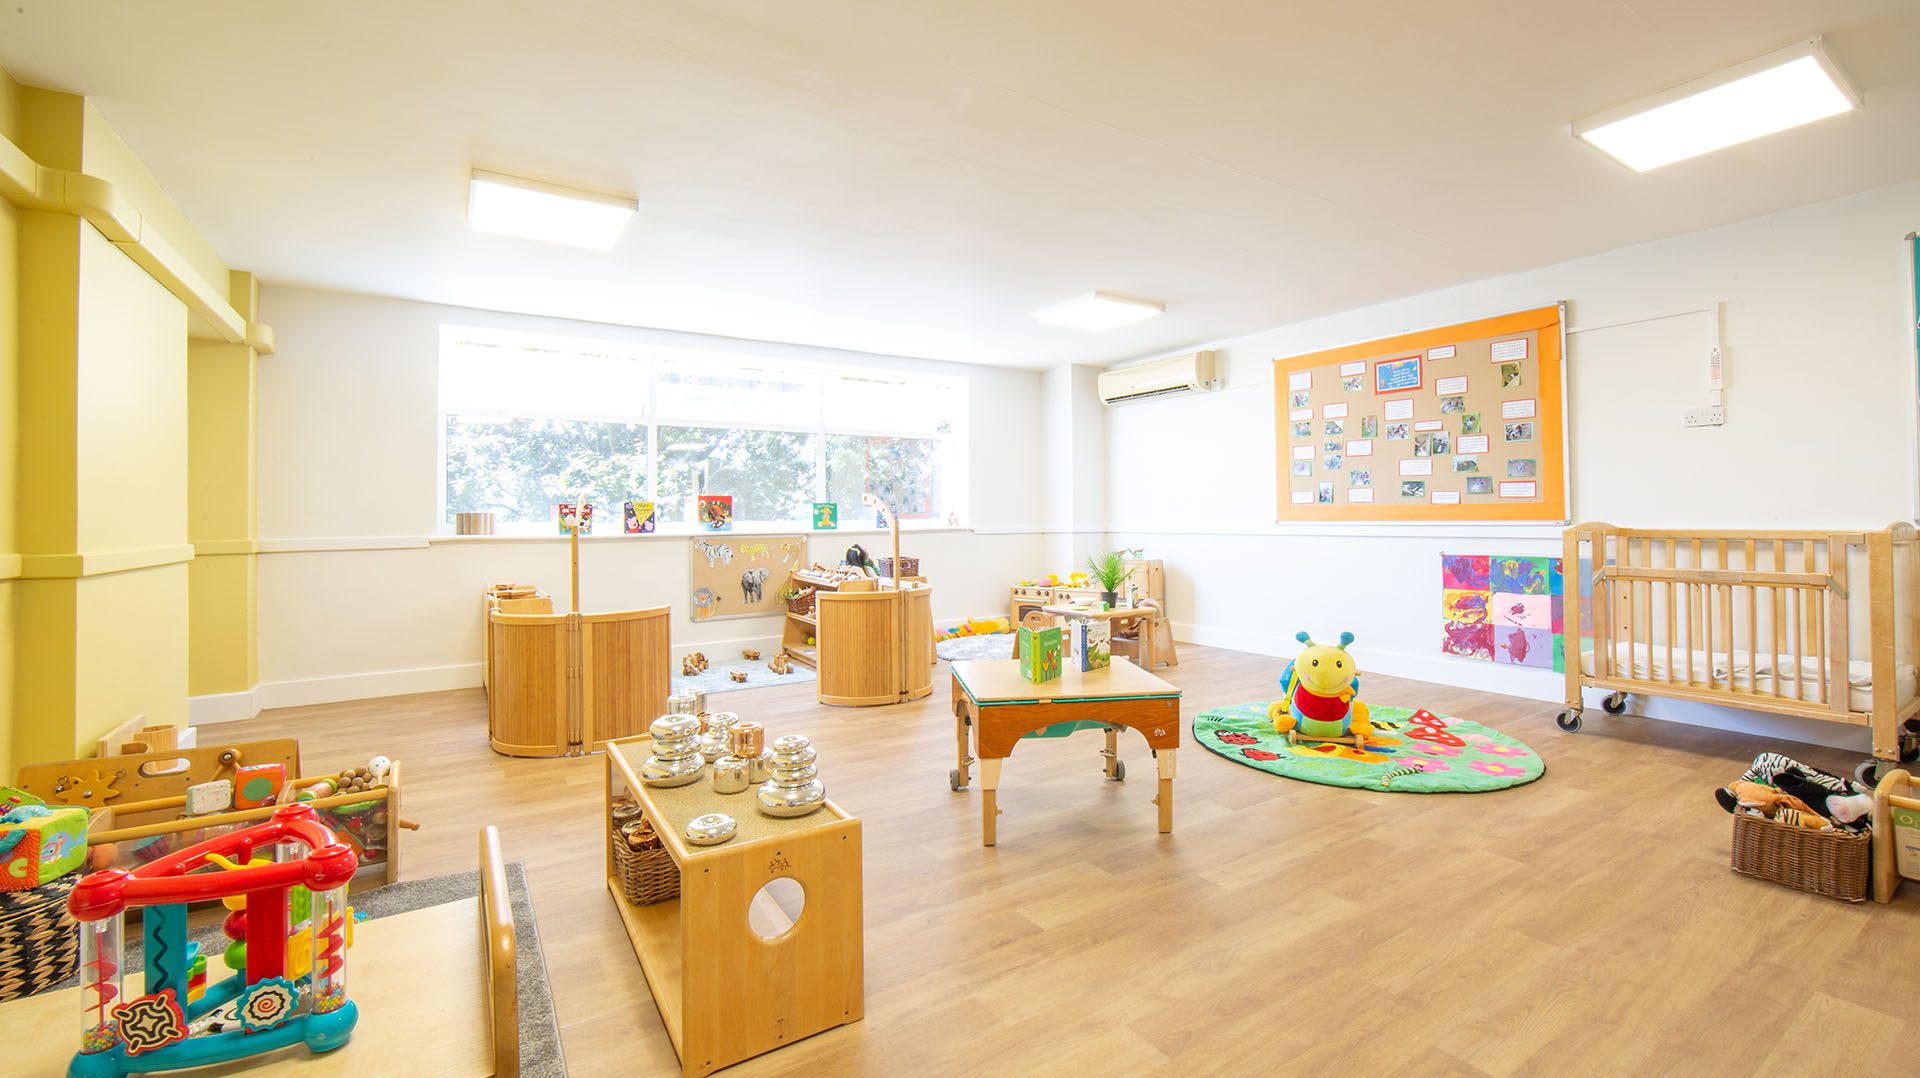 Crofton Day Nursery and Preschool